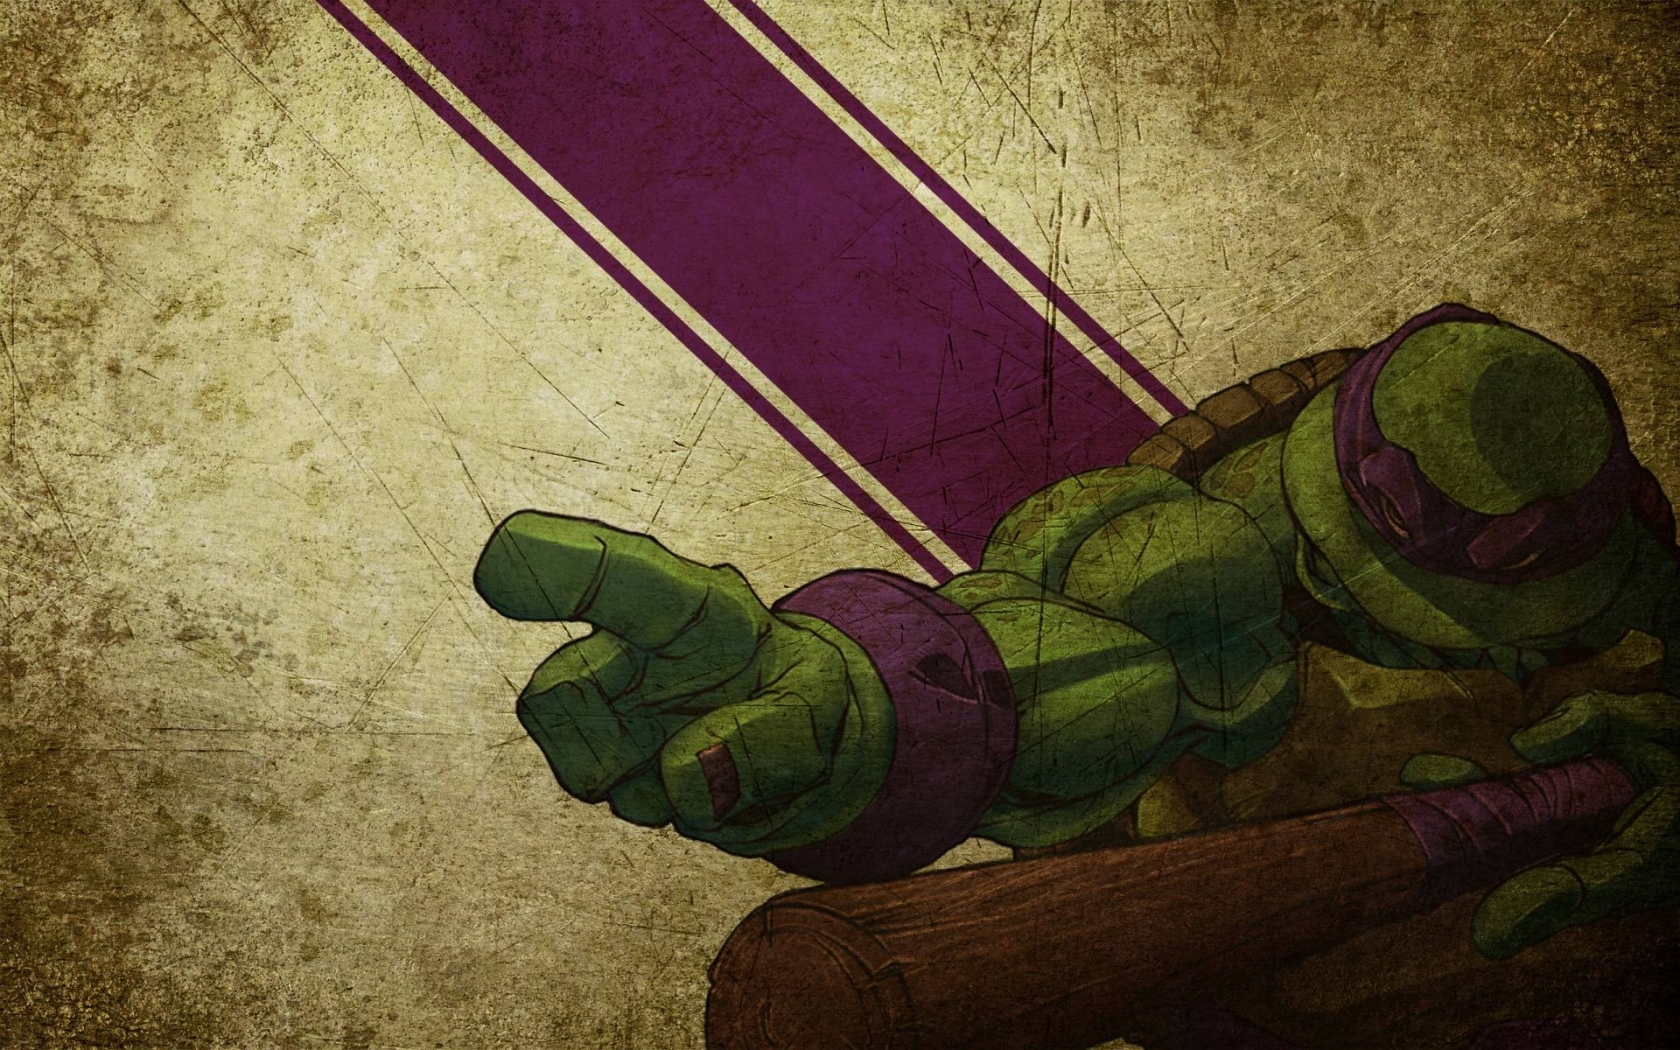 Teenage Mutant Ninja Turtles: Donatello's Destiny